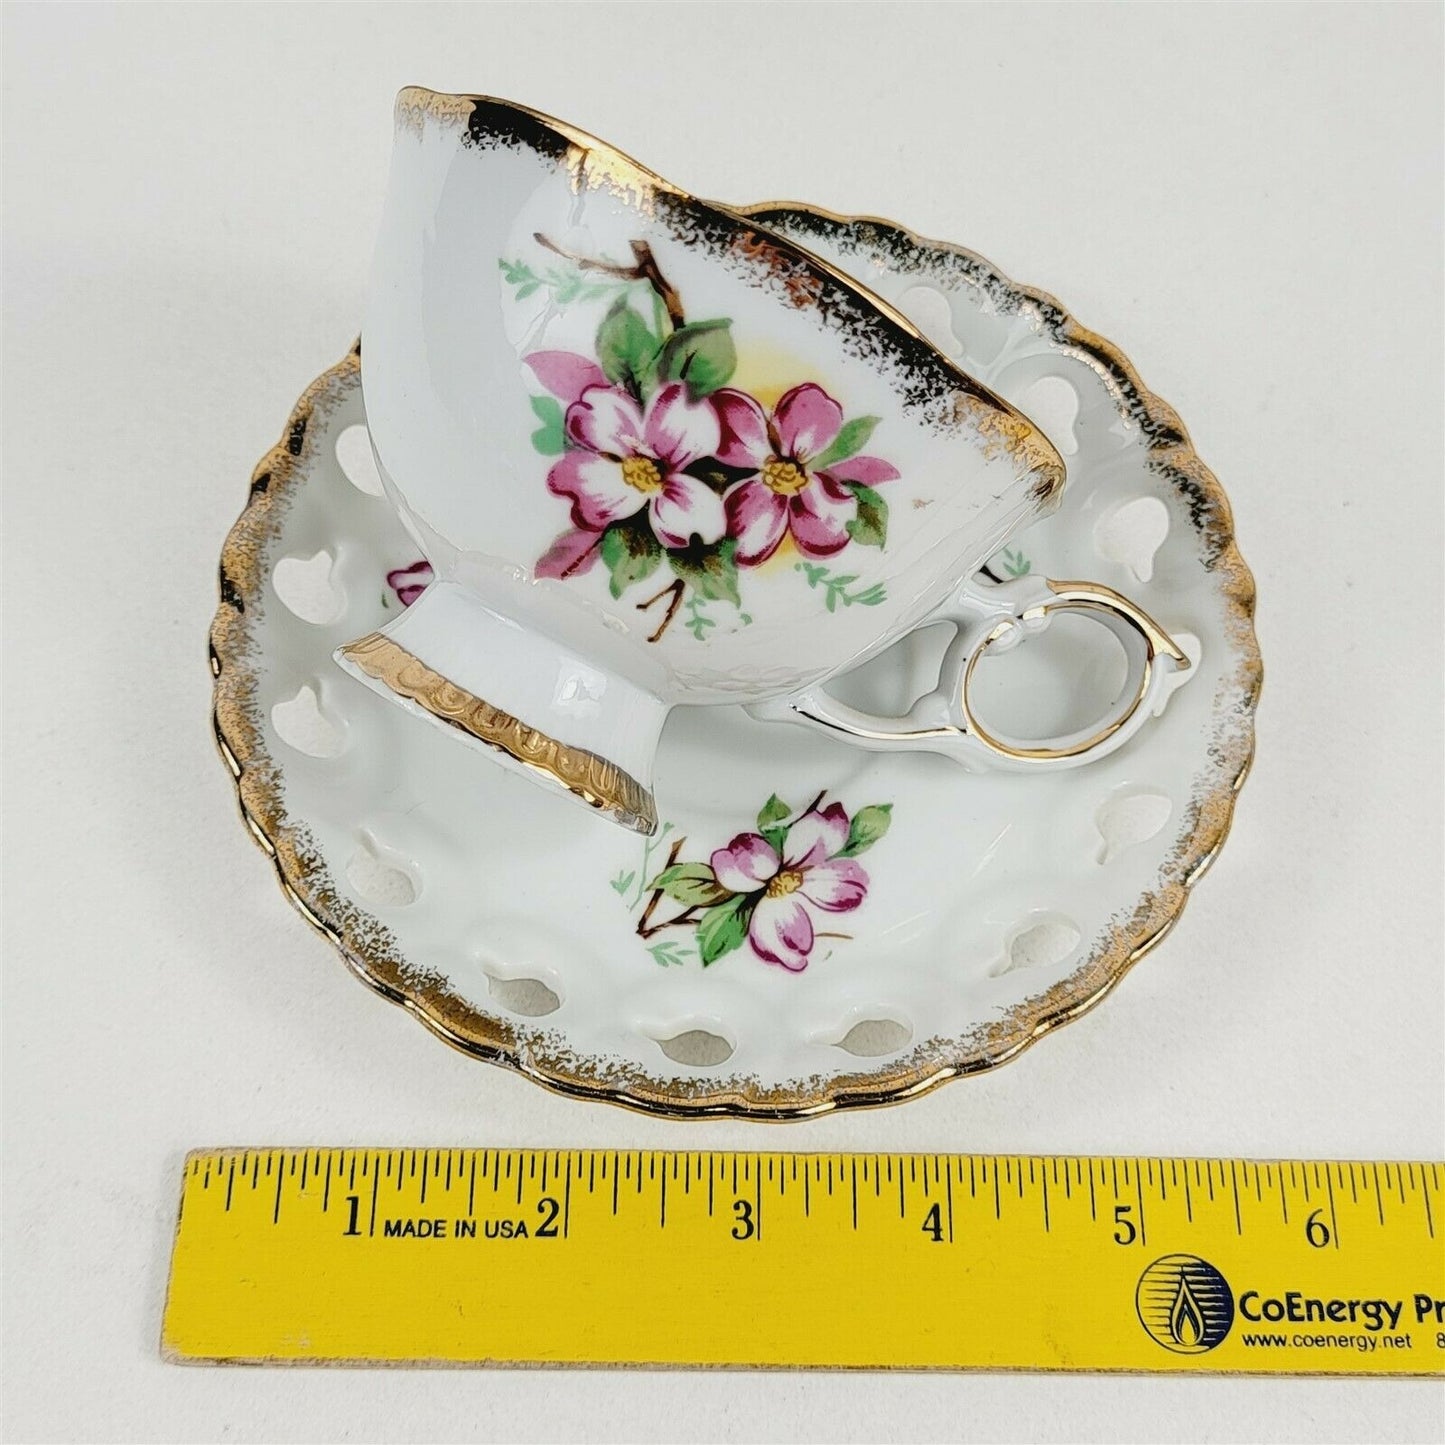 Ucagco Japan Porcelain Tea Cup & Saucer Pierced Border Gold Trim Pink Floral